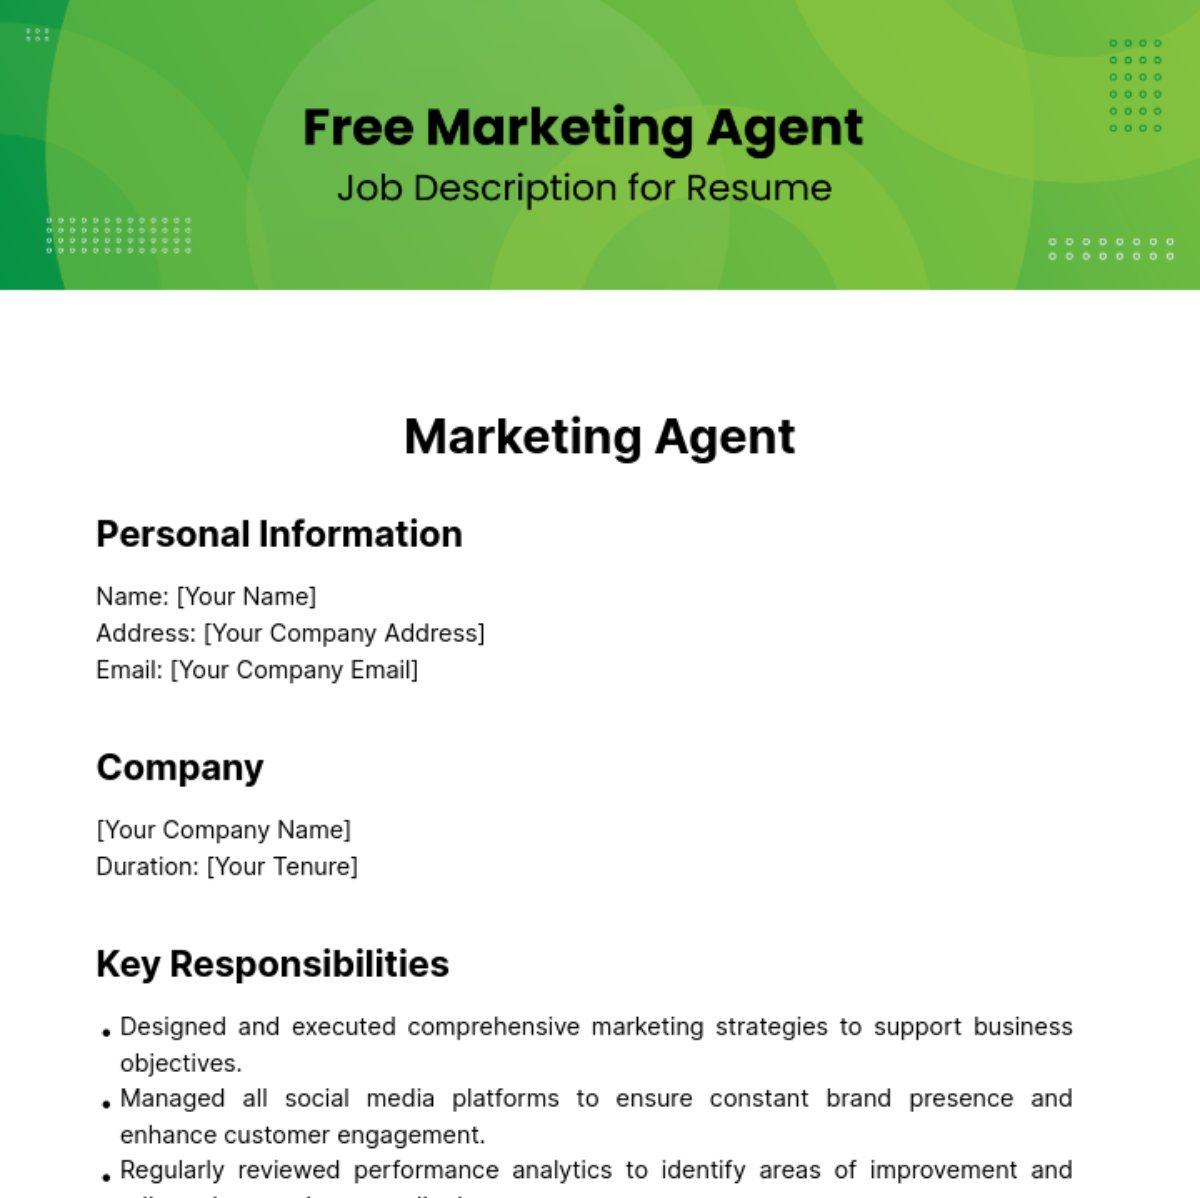 Free Marketing Job Description for Resume Template